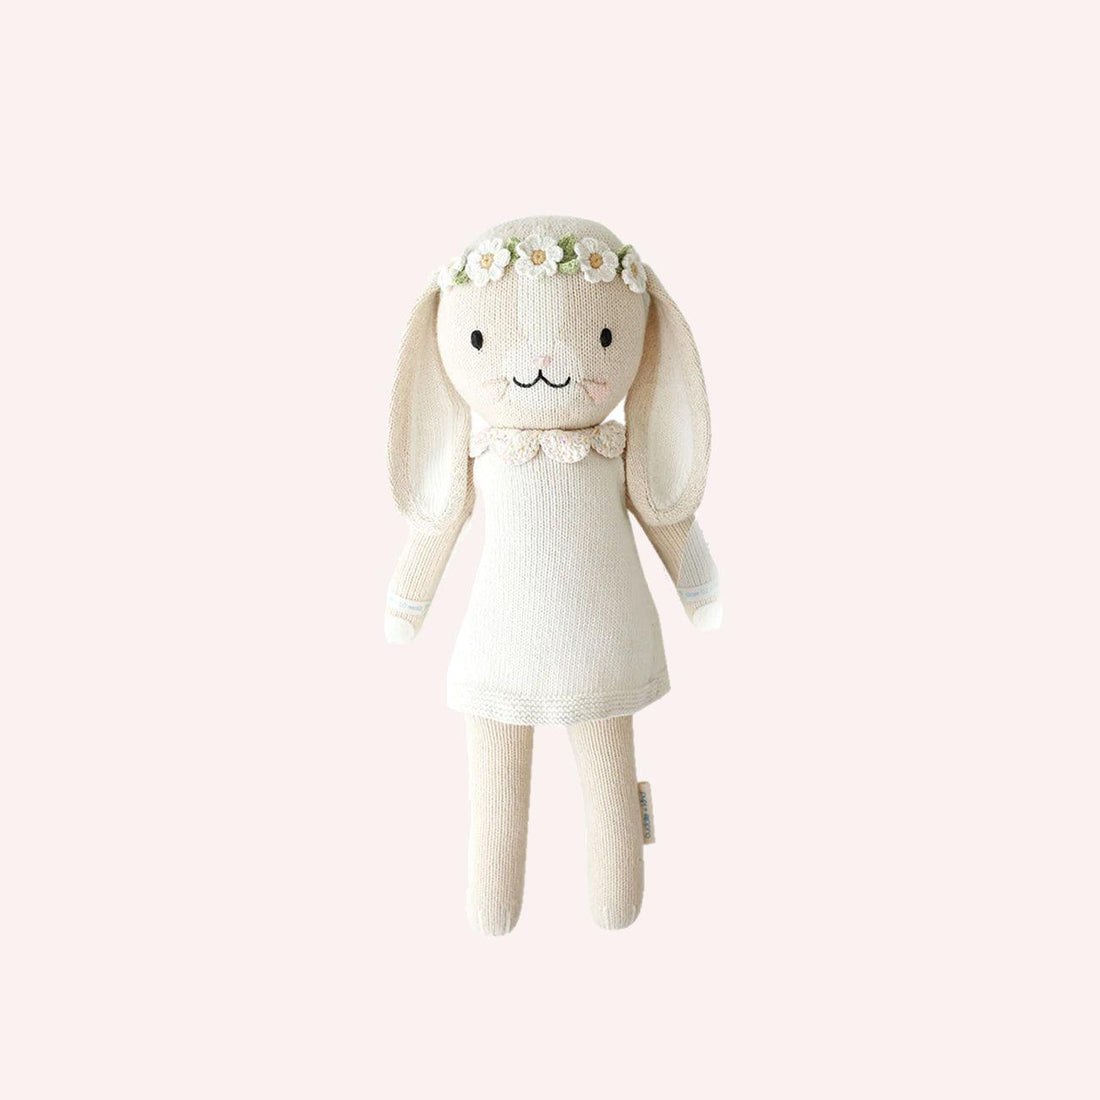 Little Hand Knitted Doll - Hannah the Bunny